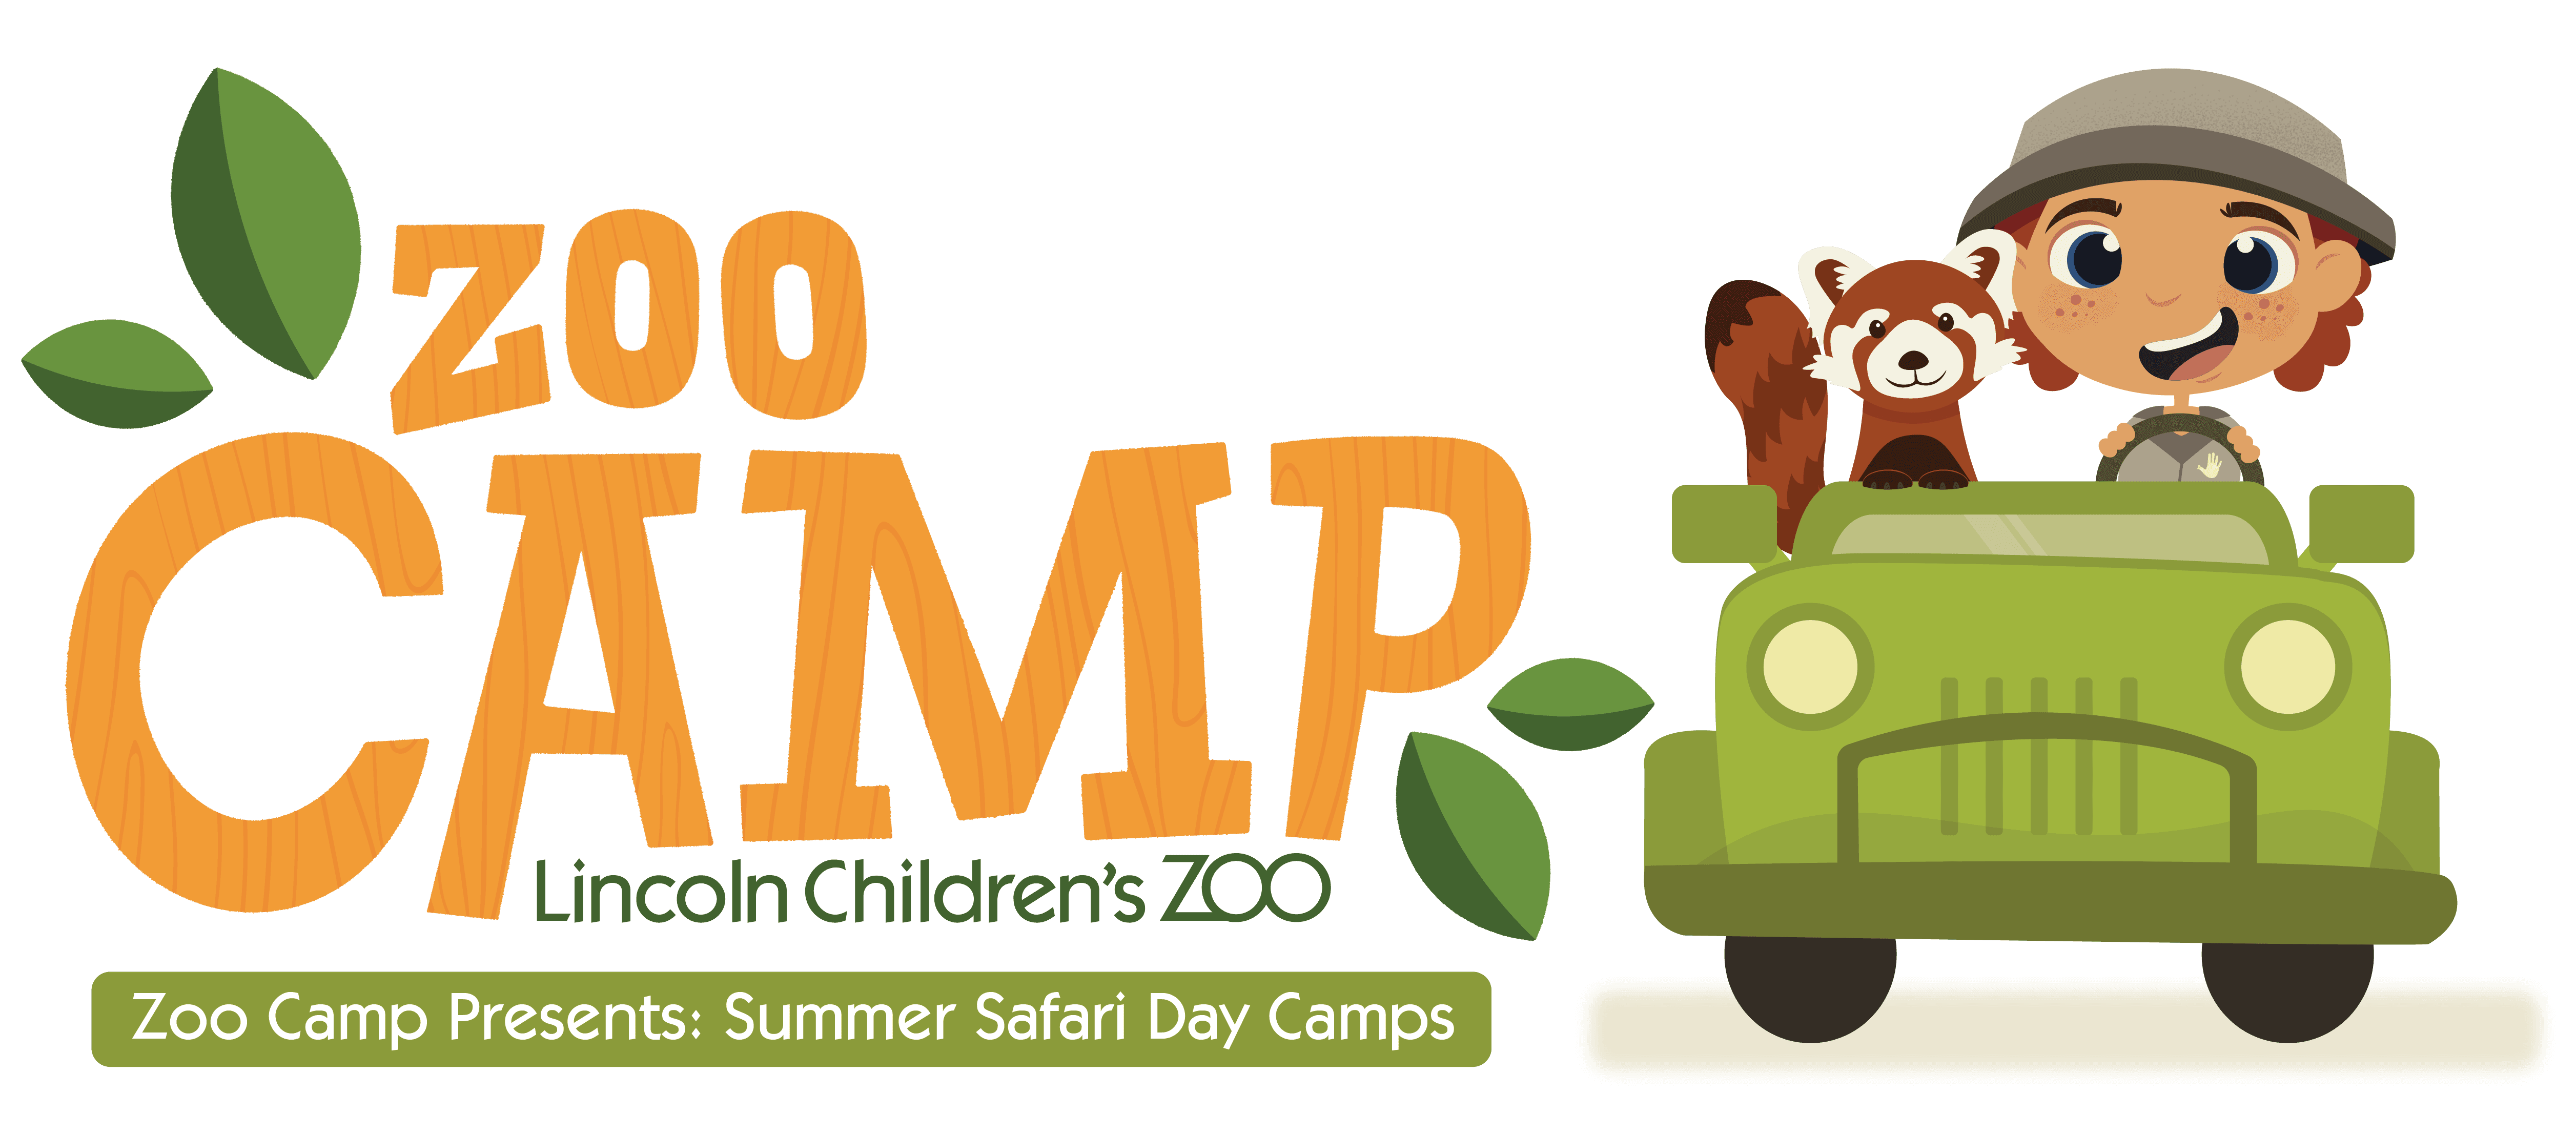 Zoo Camp